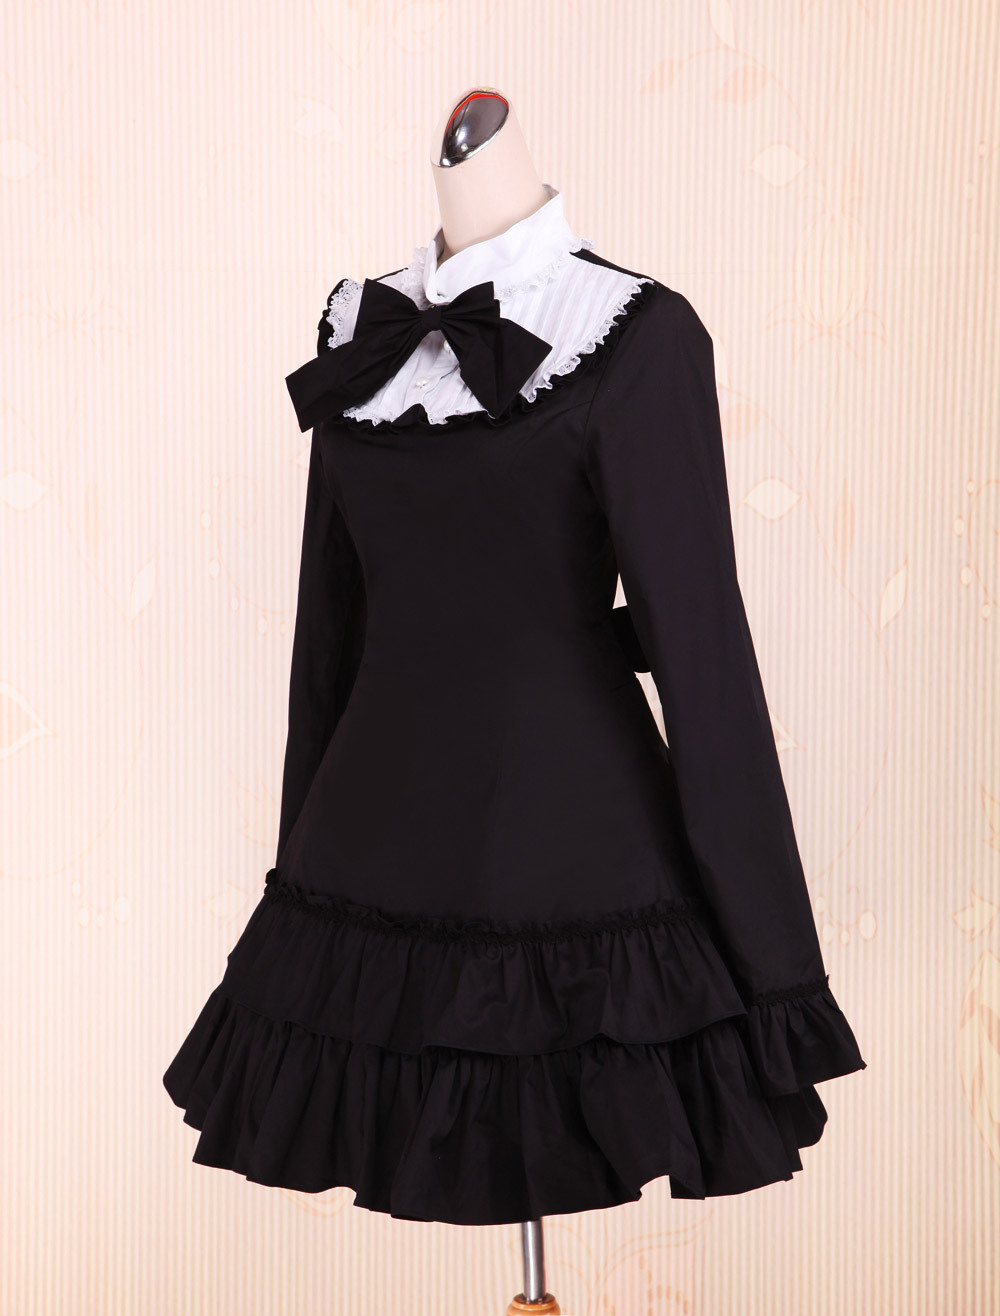 ZeroMart Black Cotton Ruffle Bow Vintage Victorian Gothic School Lolita ...